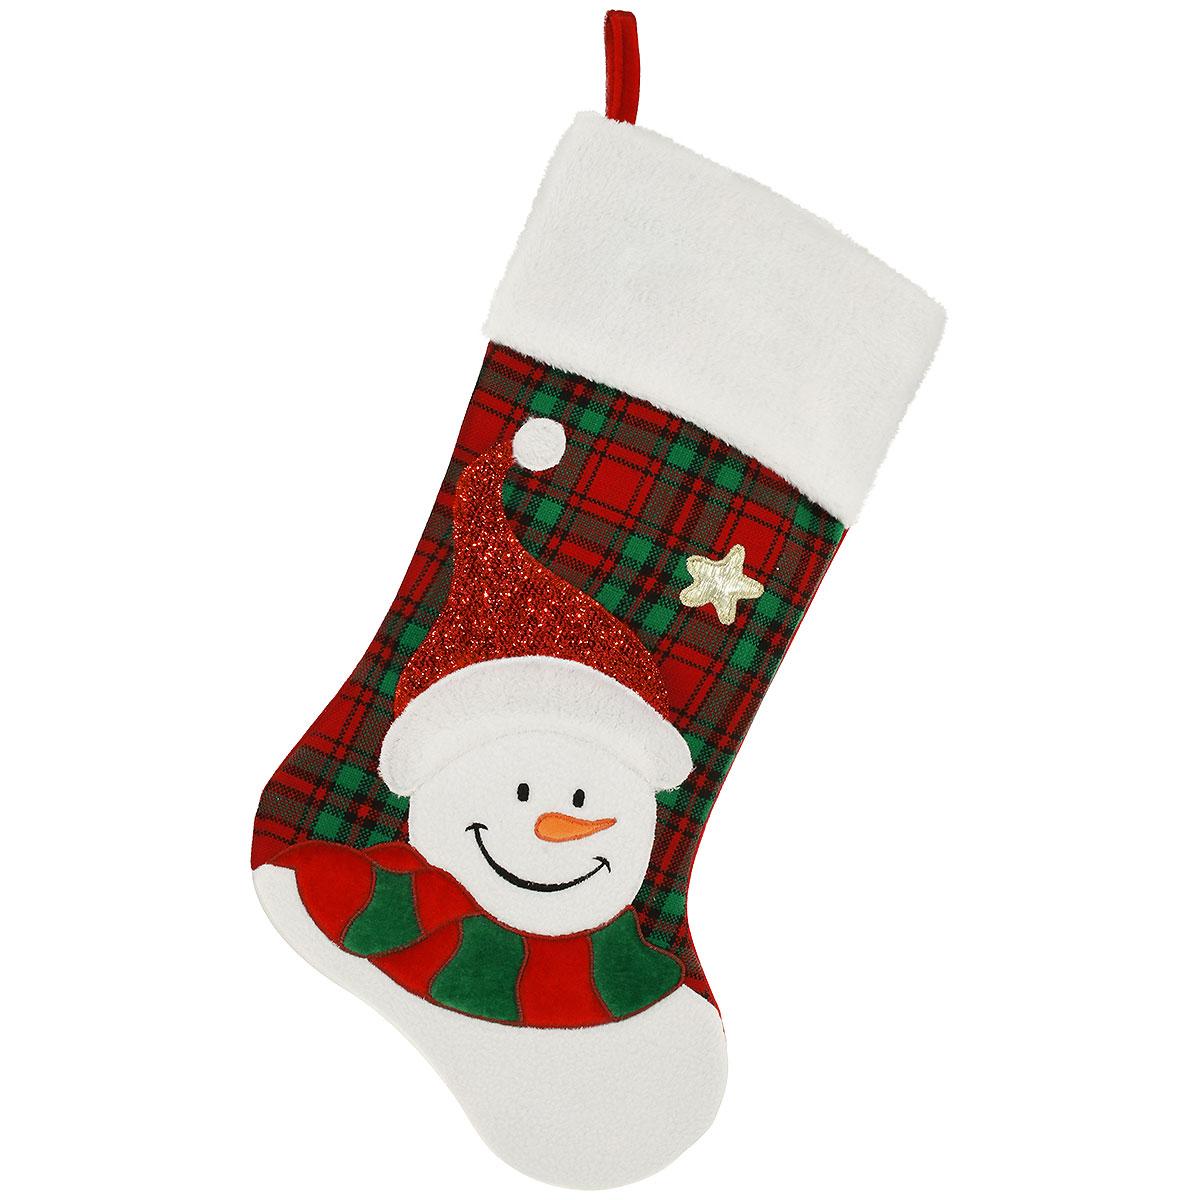 20.5" Plaid Snowman Stocking